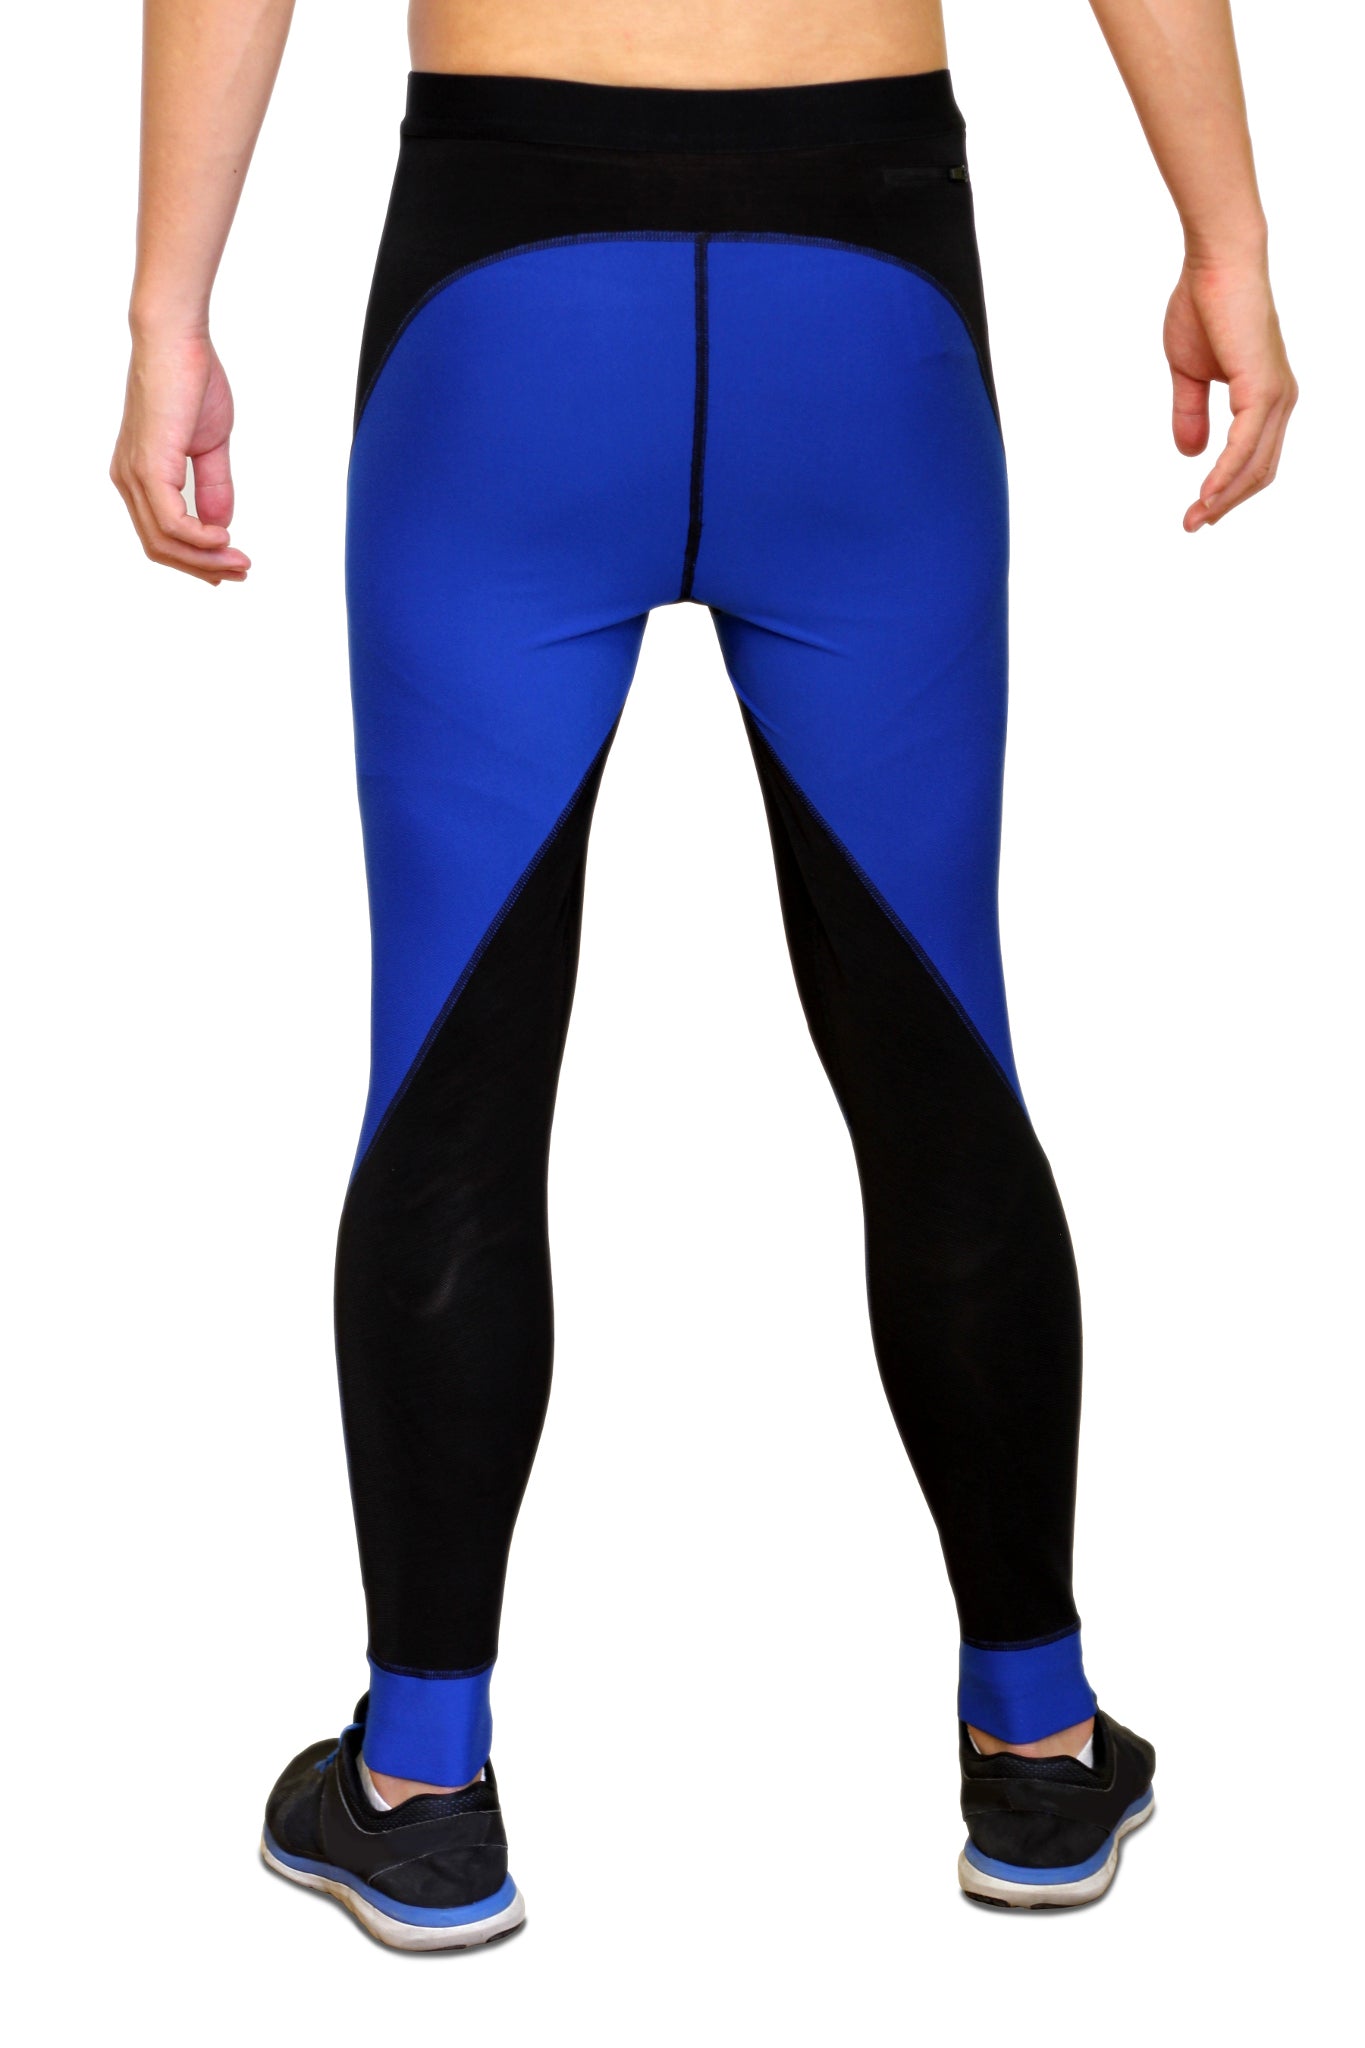 NoPain men's compression tights, blue